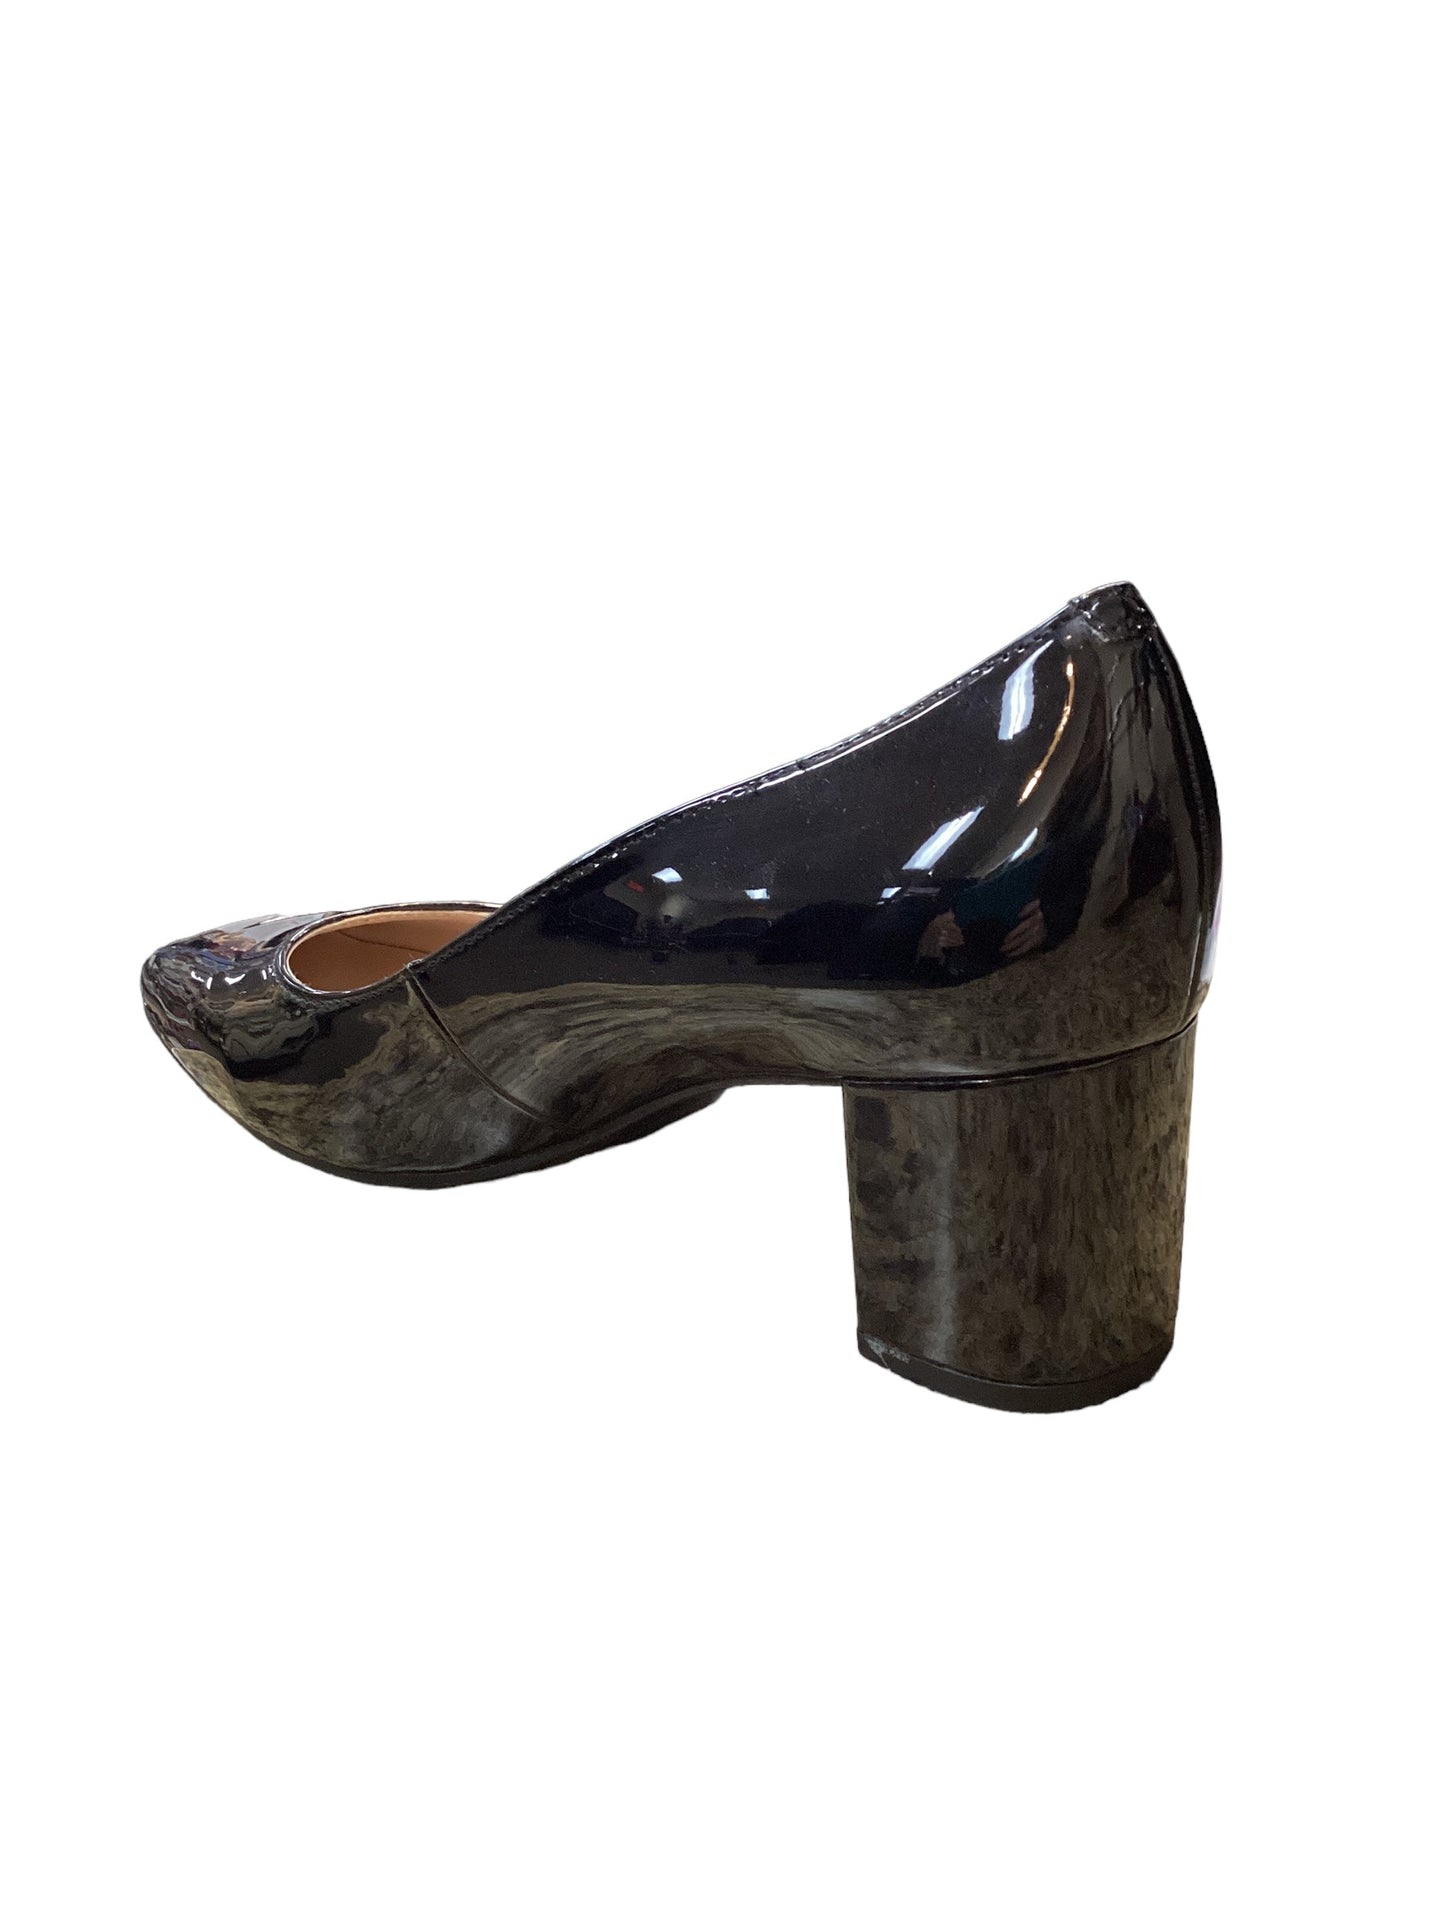 Shoes Heels Block By Bandolino  Size: 7.5